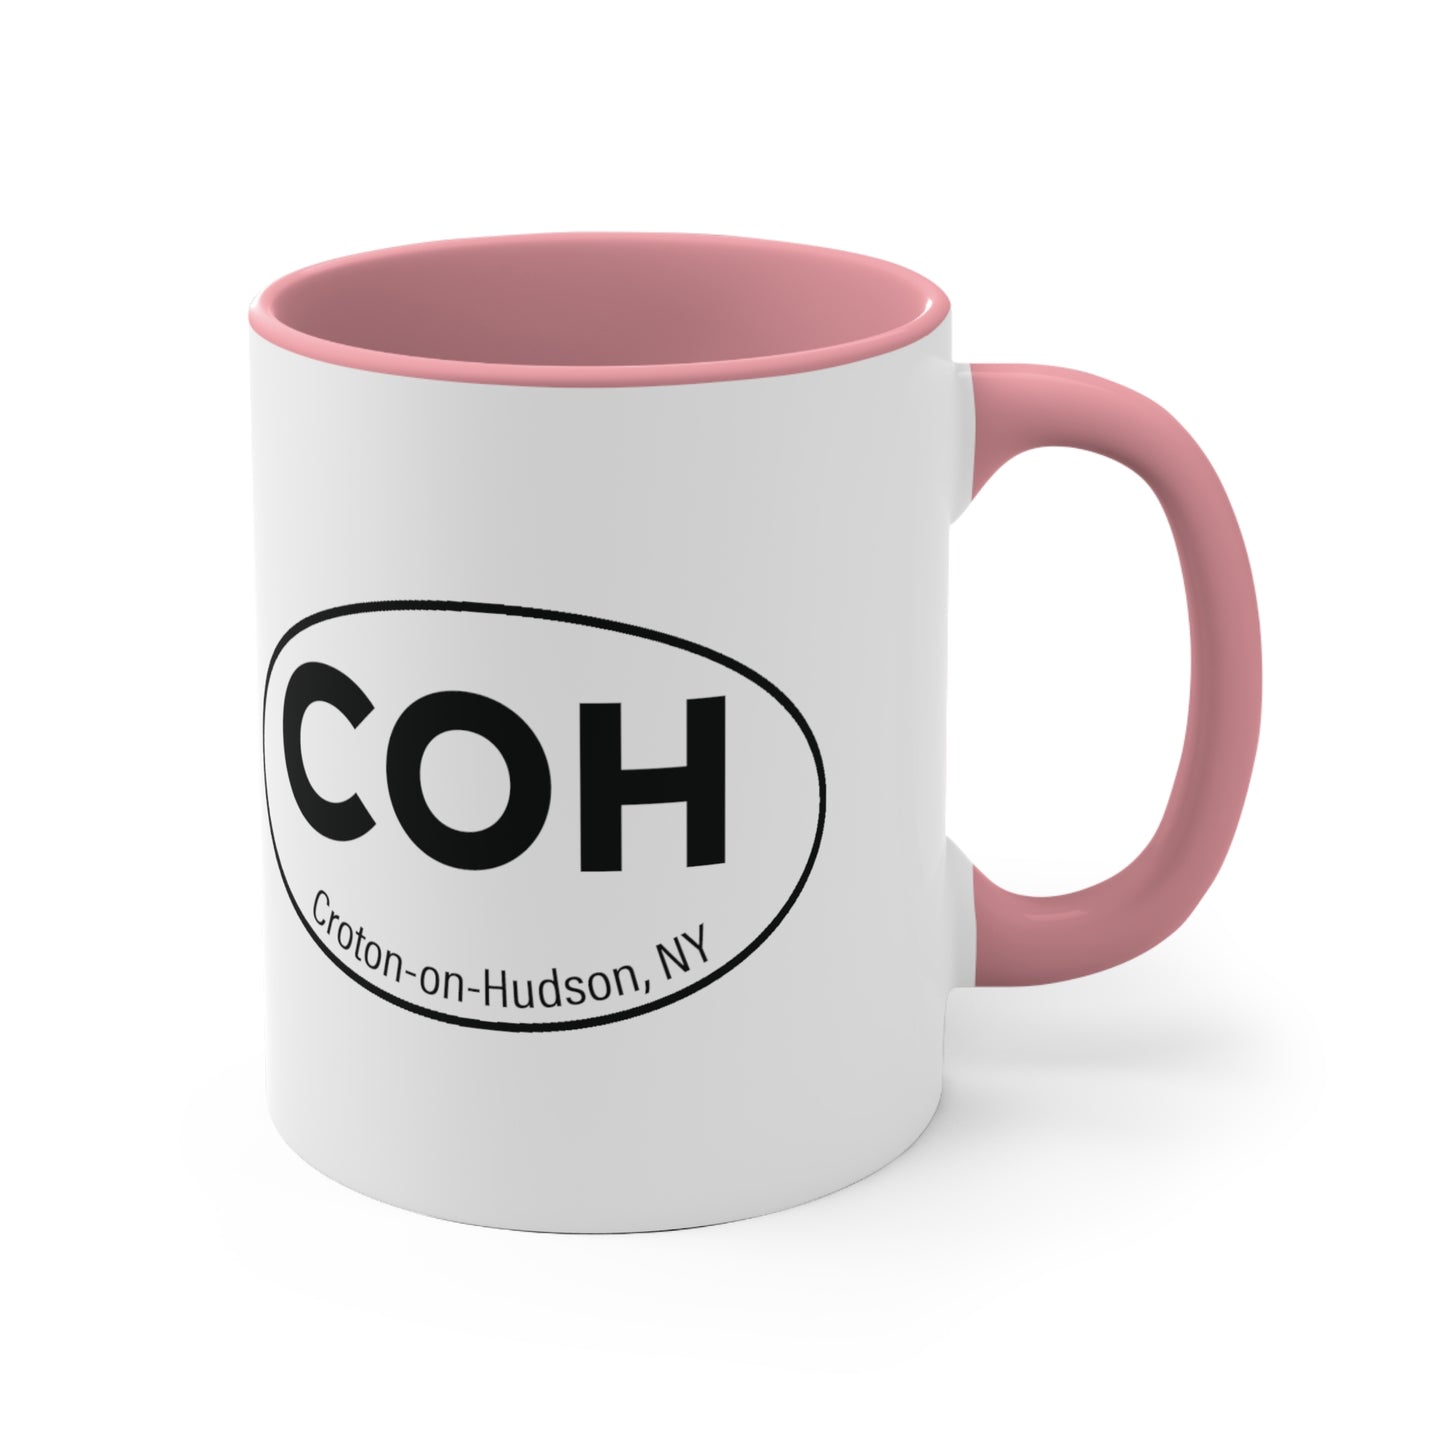 The COH Abbreviation Mug